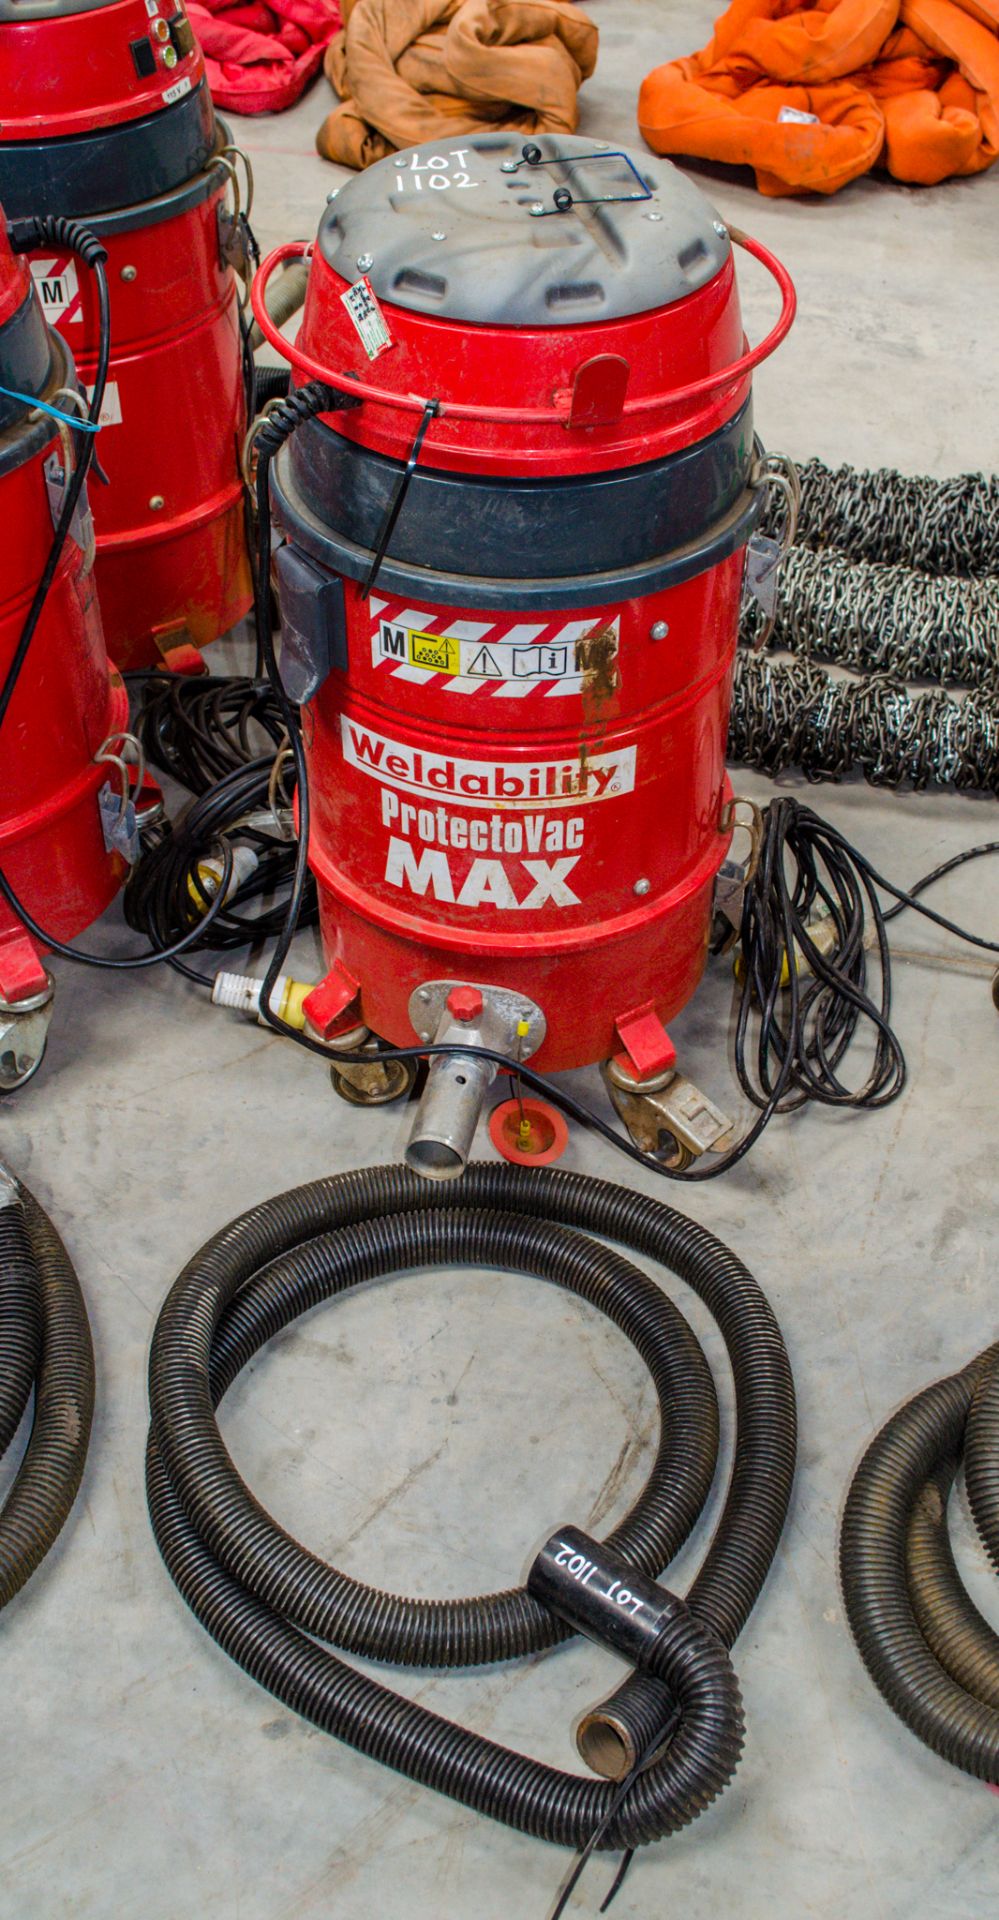 Weldability Protecto Vac Max 110v welding fume vacuum c/w hose A1085035